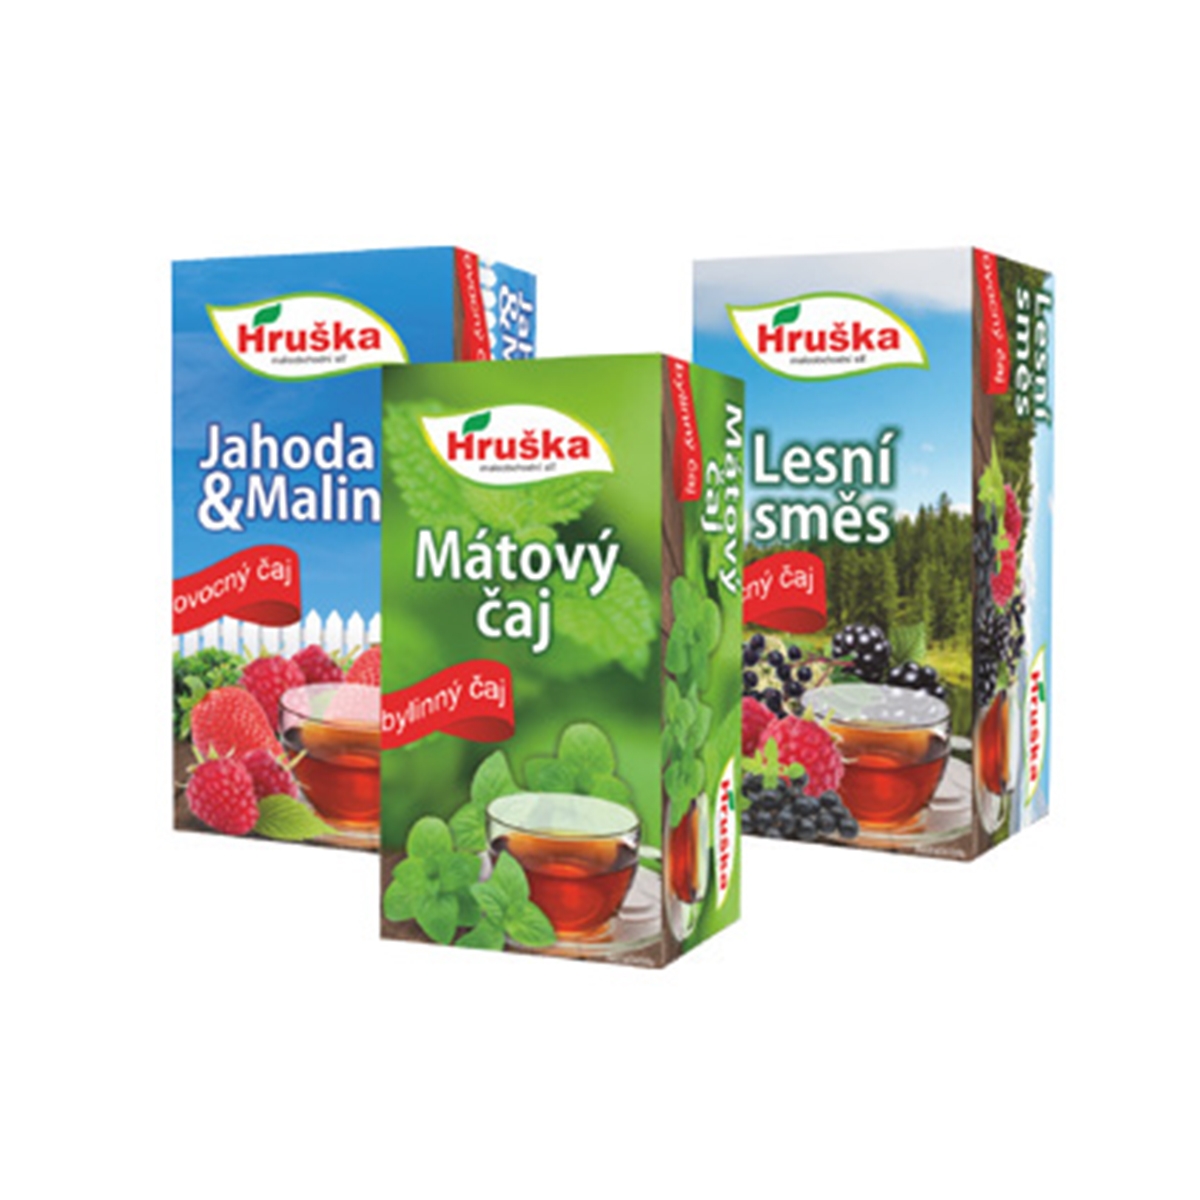 Hruška Mátový bylinný čaj 30 g